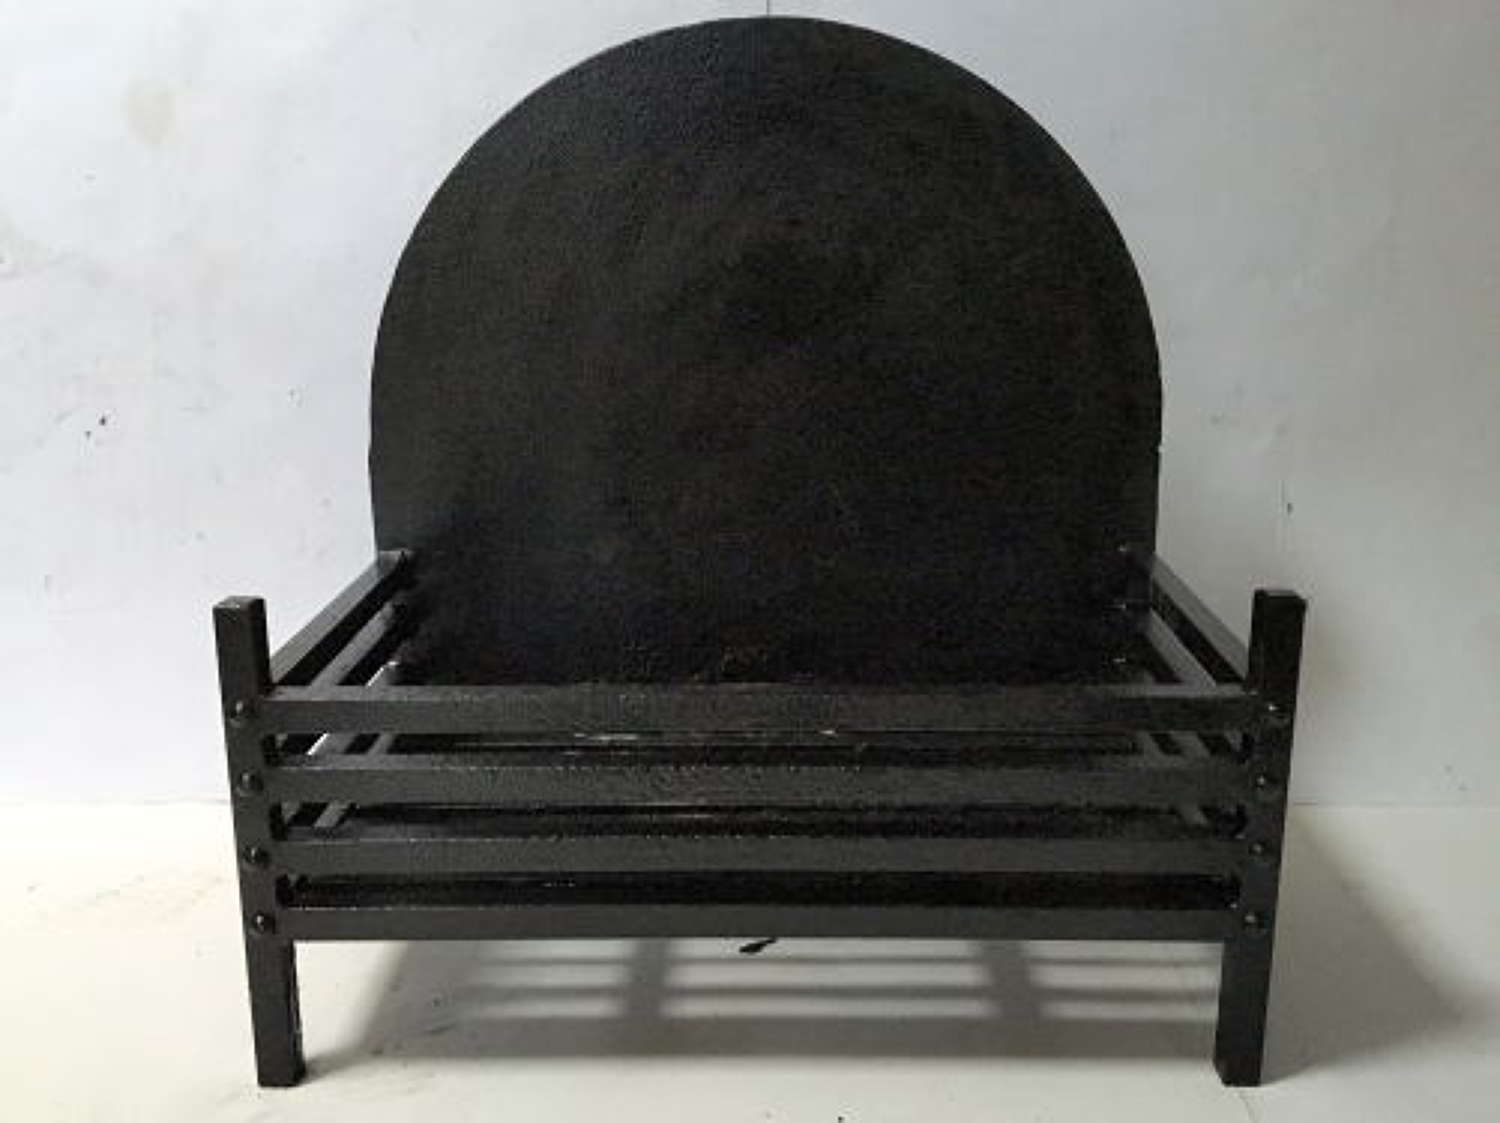 Medium Sized Fire Basket c.1950